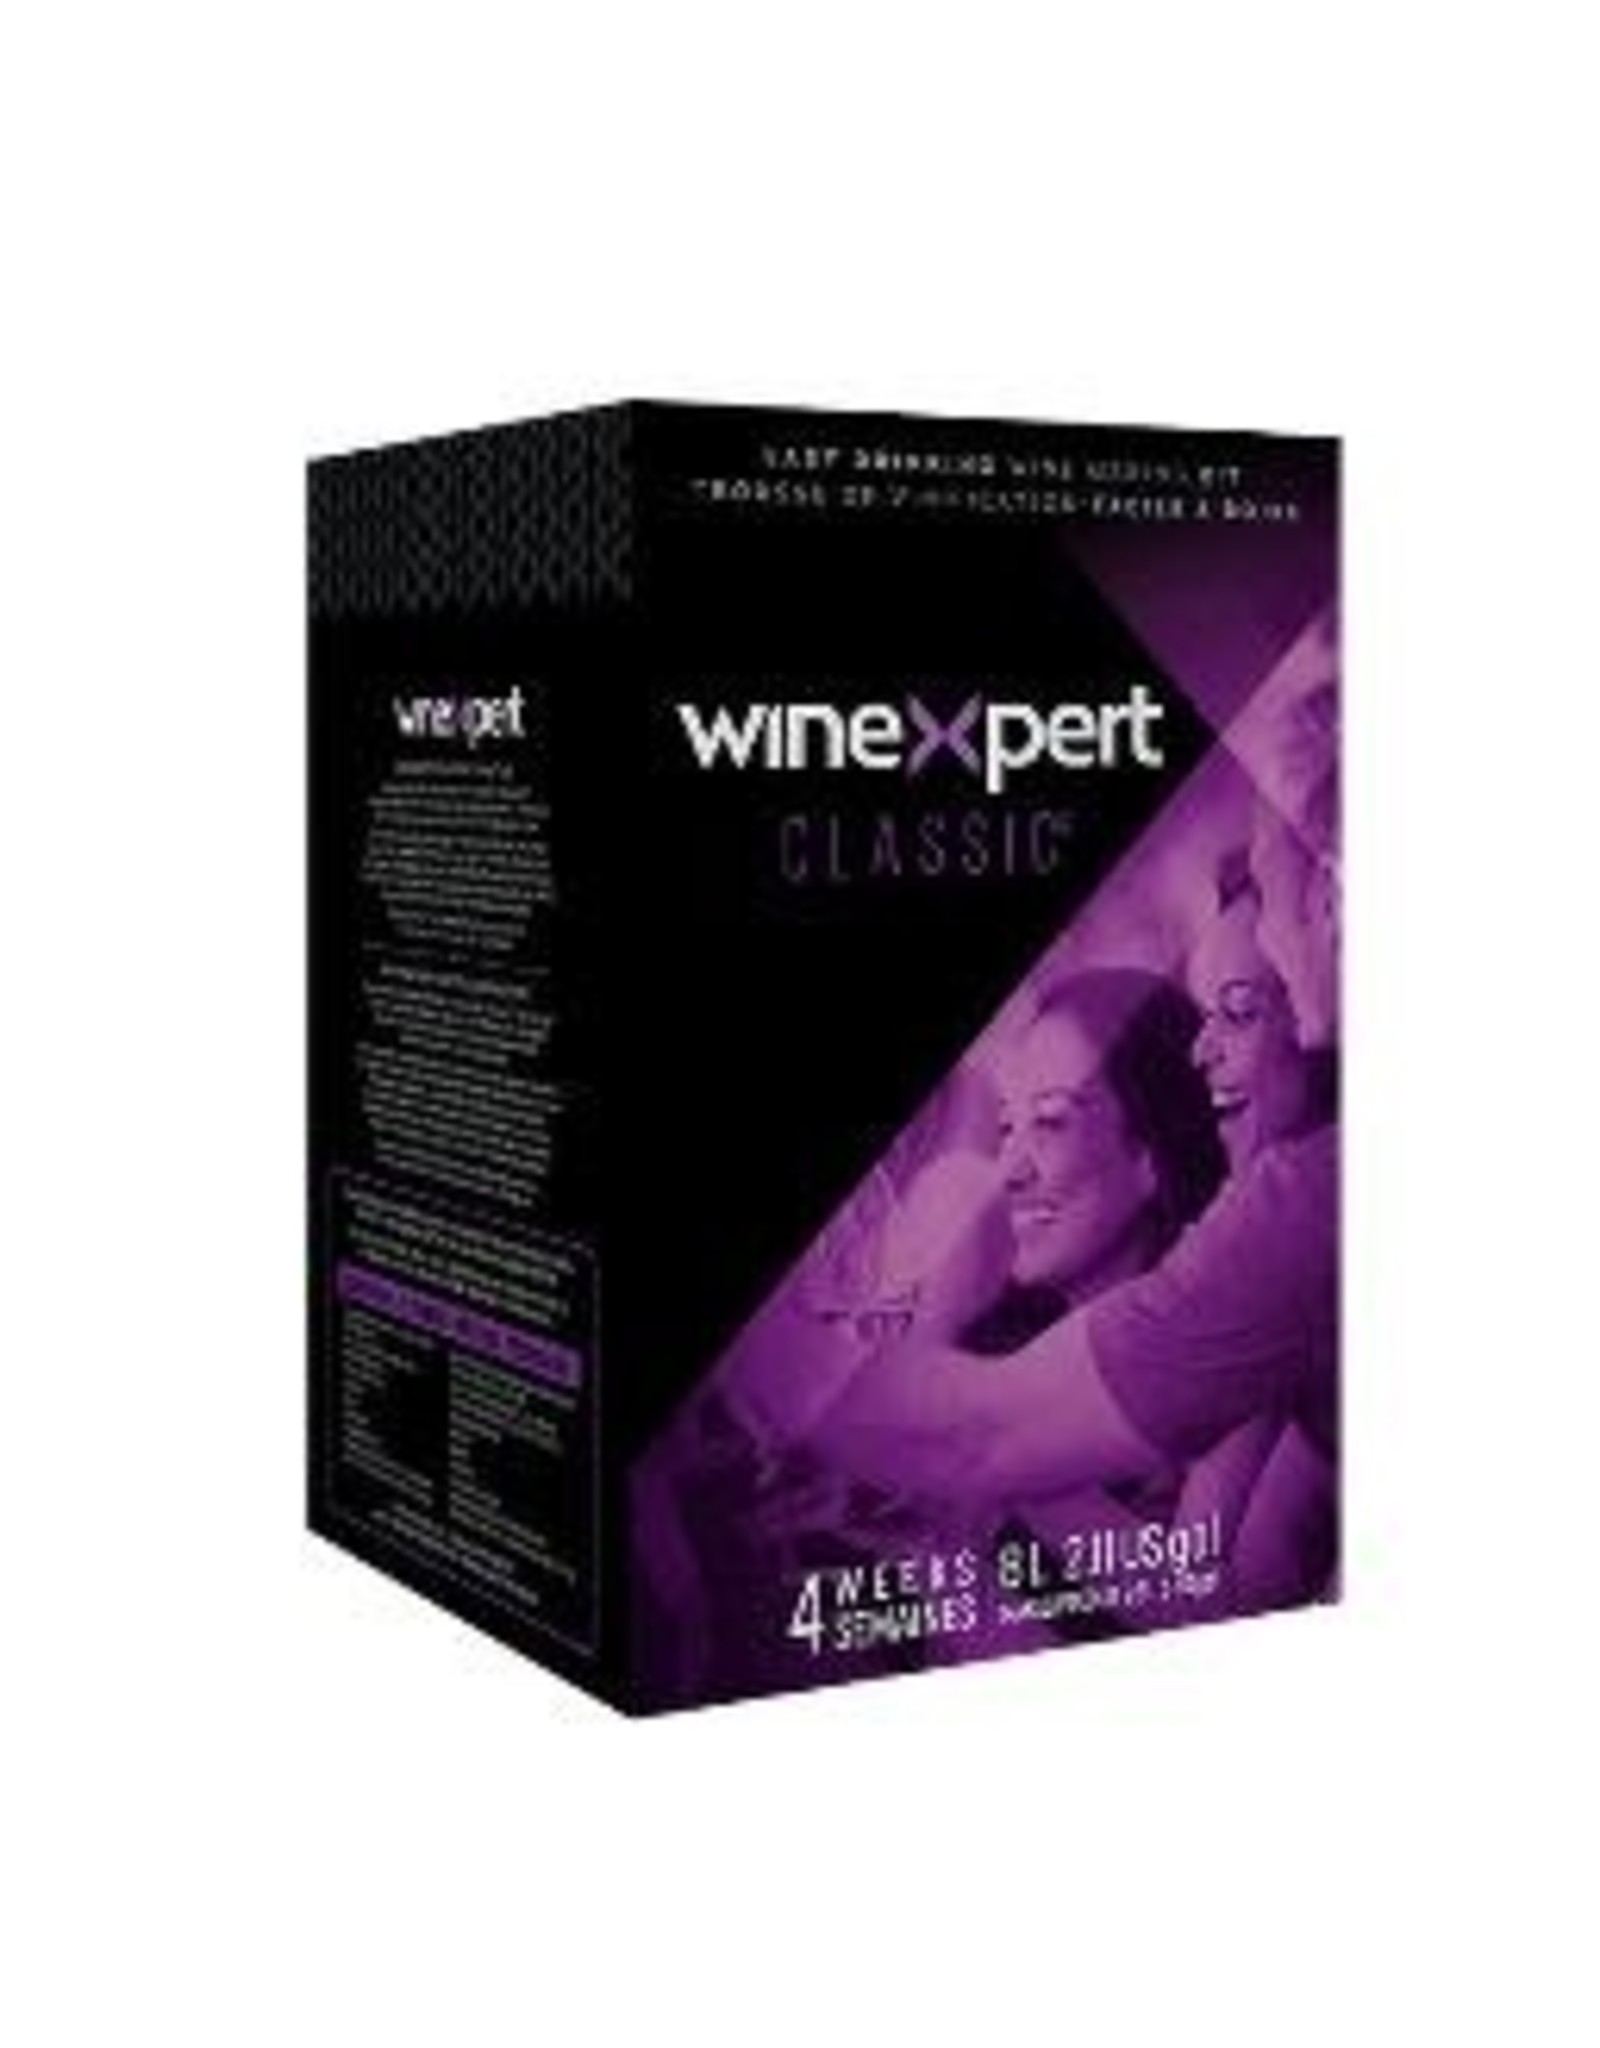 Classic Winexpert Classic Pinot Grigio Italy 8L